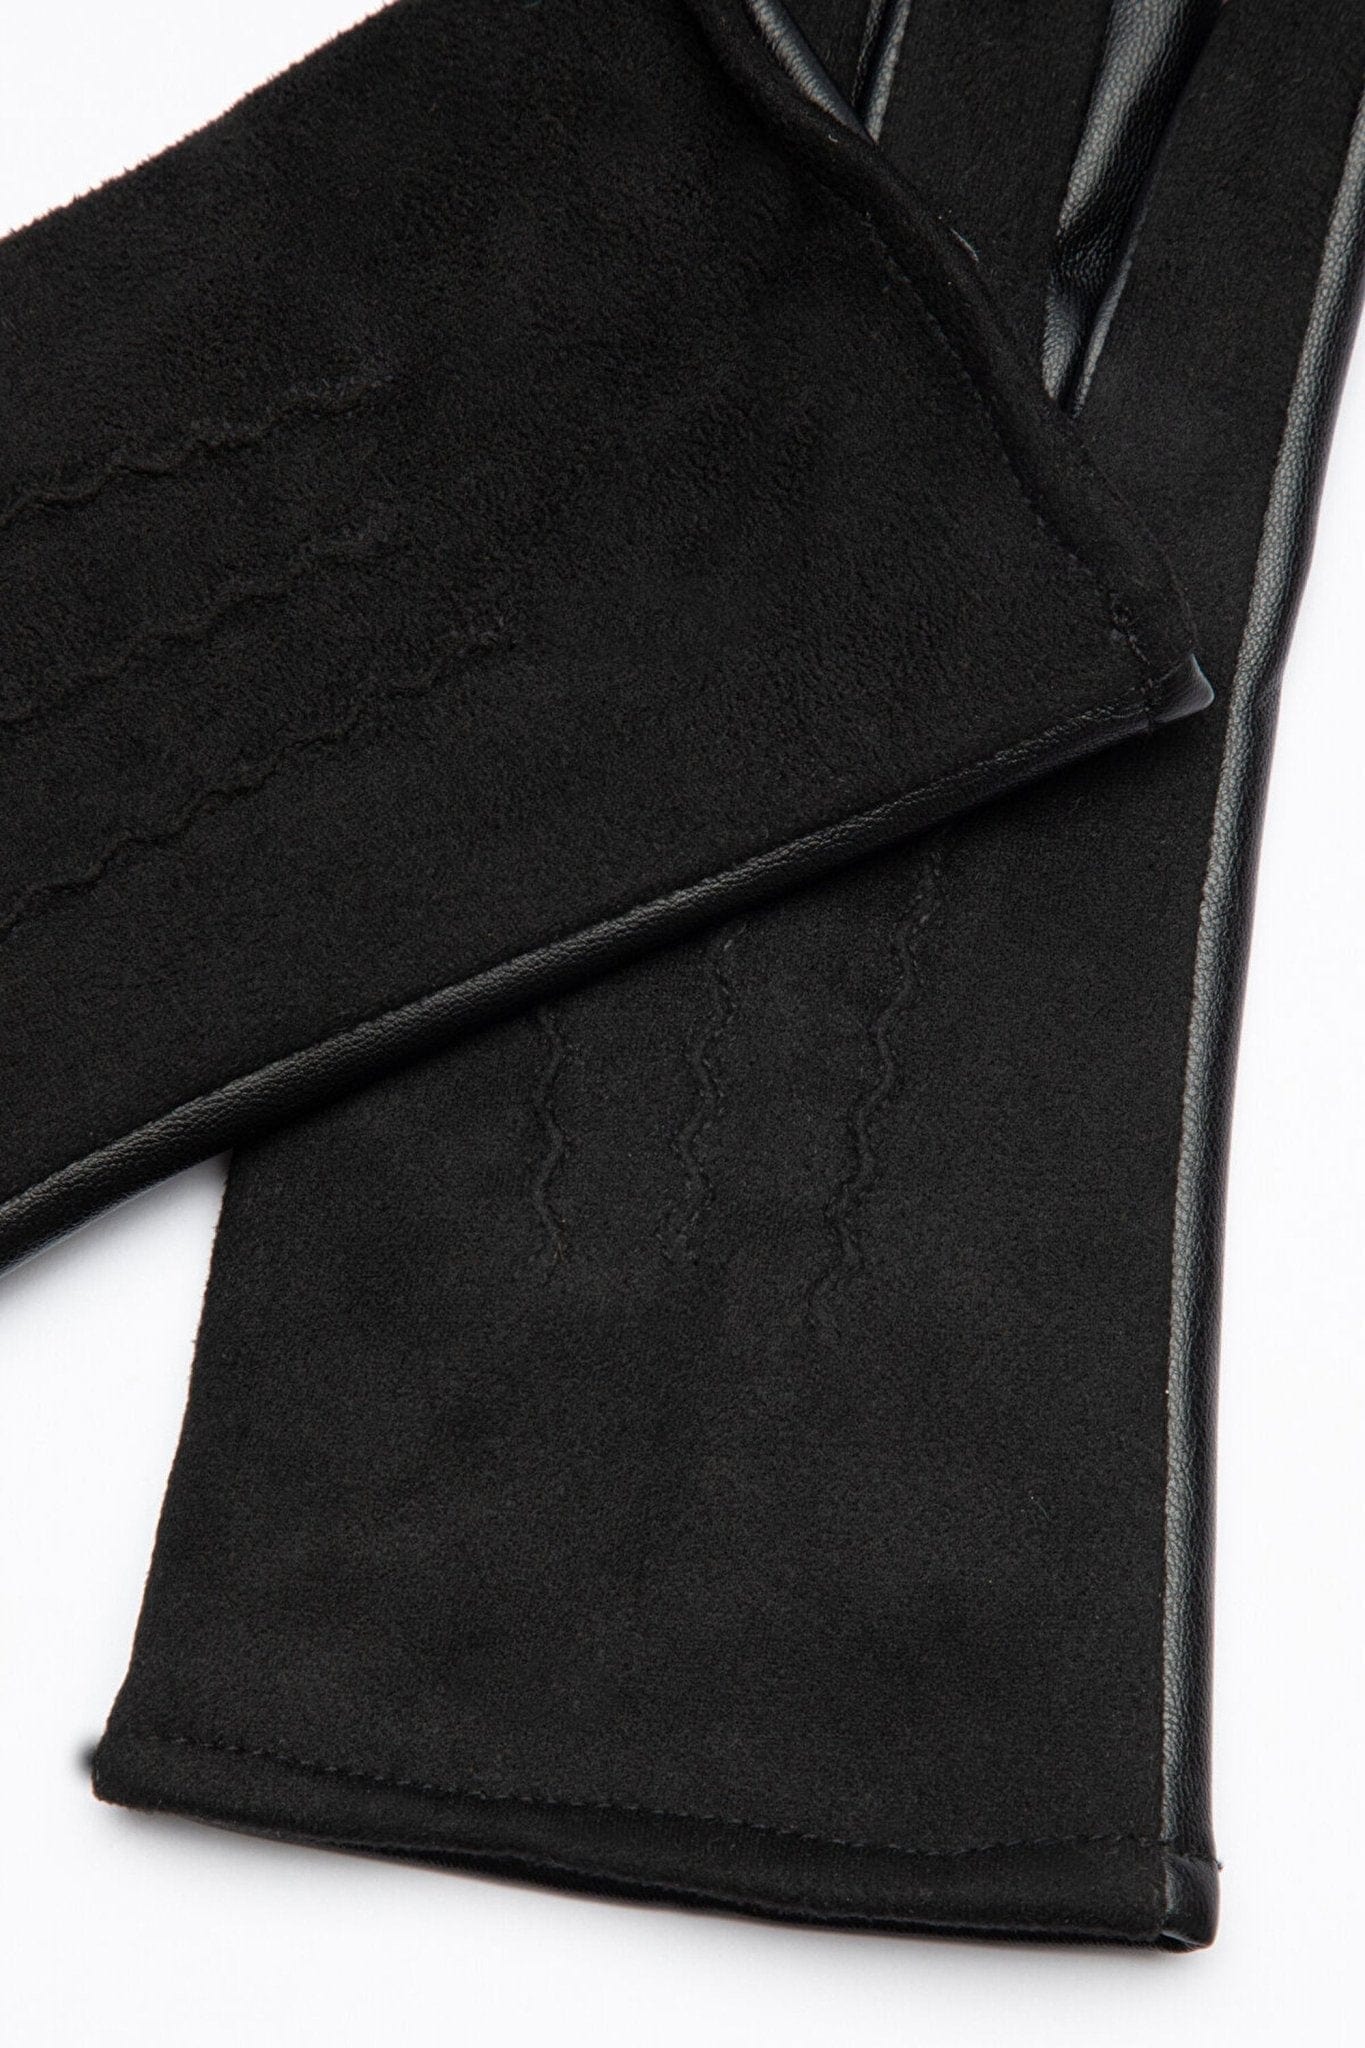 Black Eva Glove One Size FLEXISB